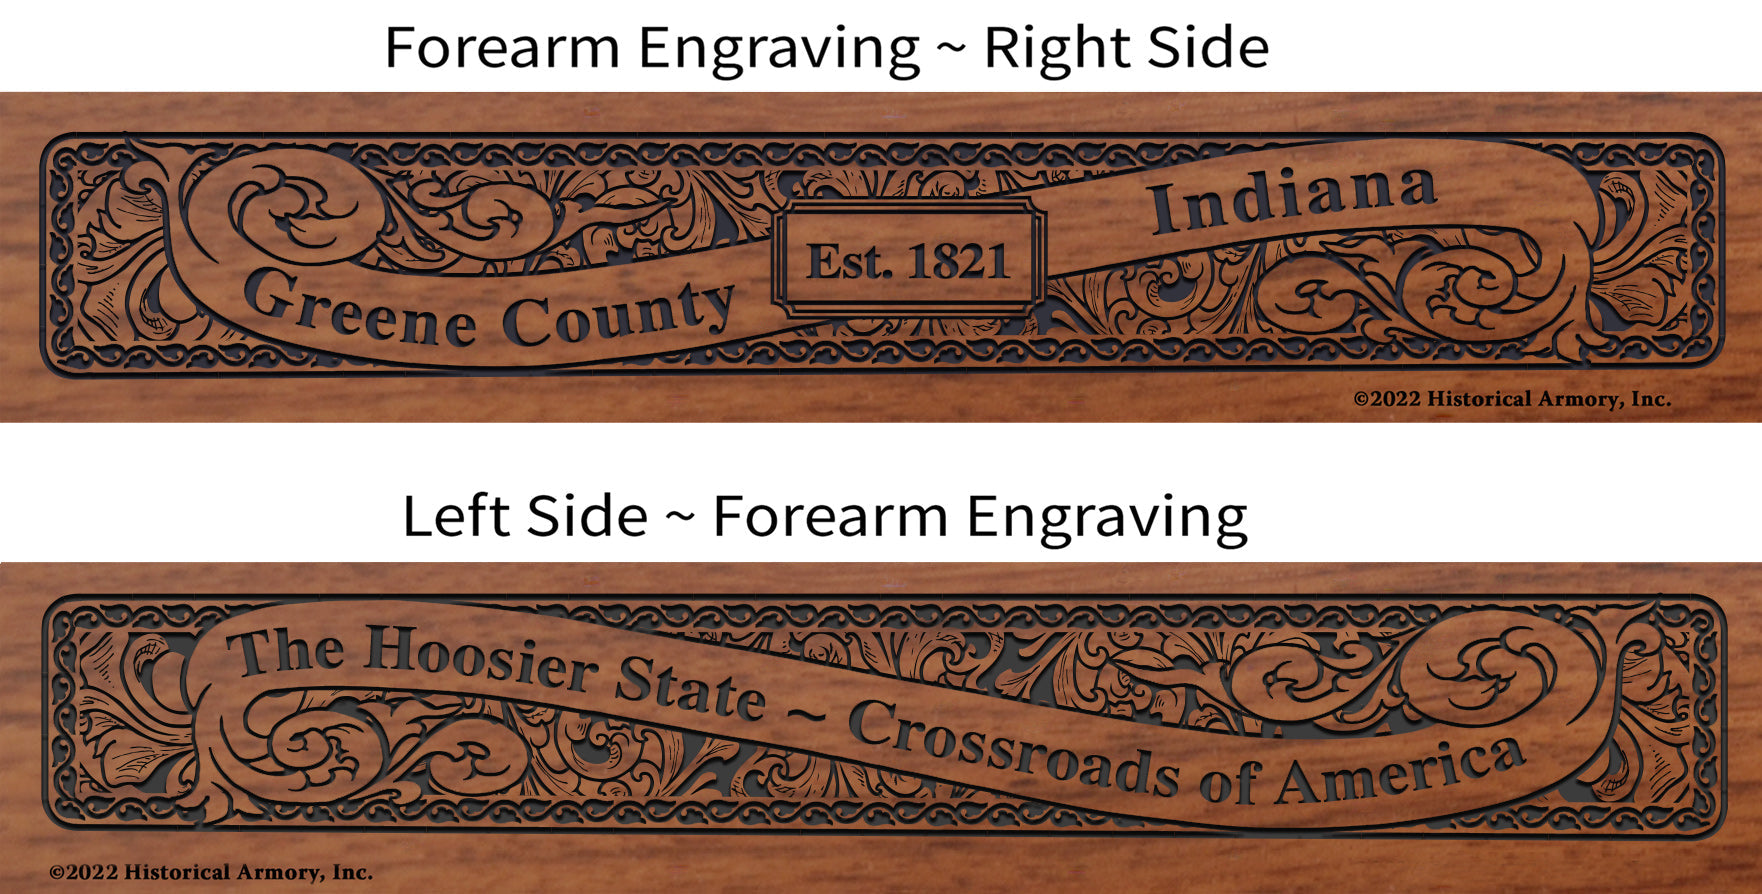 Greene County Indiana Engraved Rifle Forearm